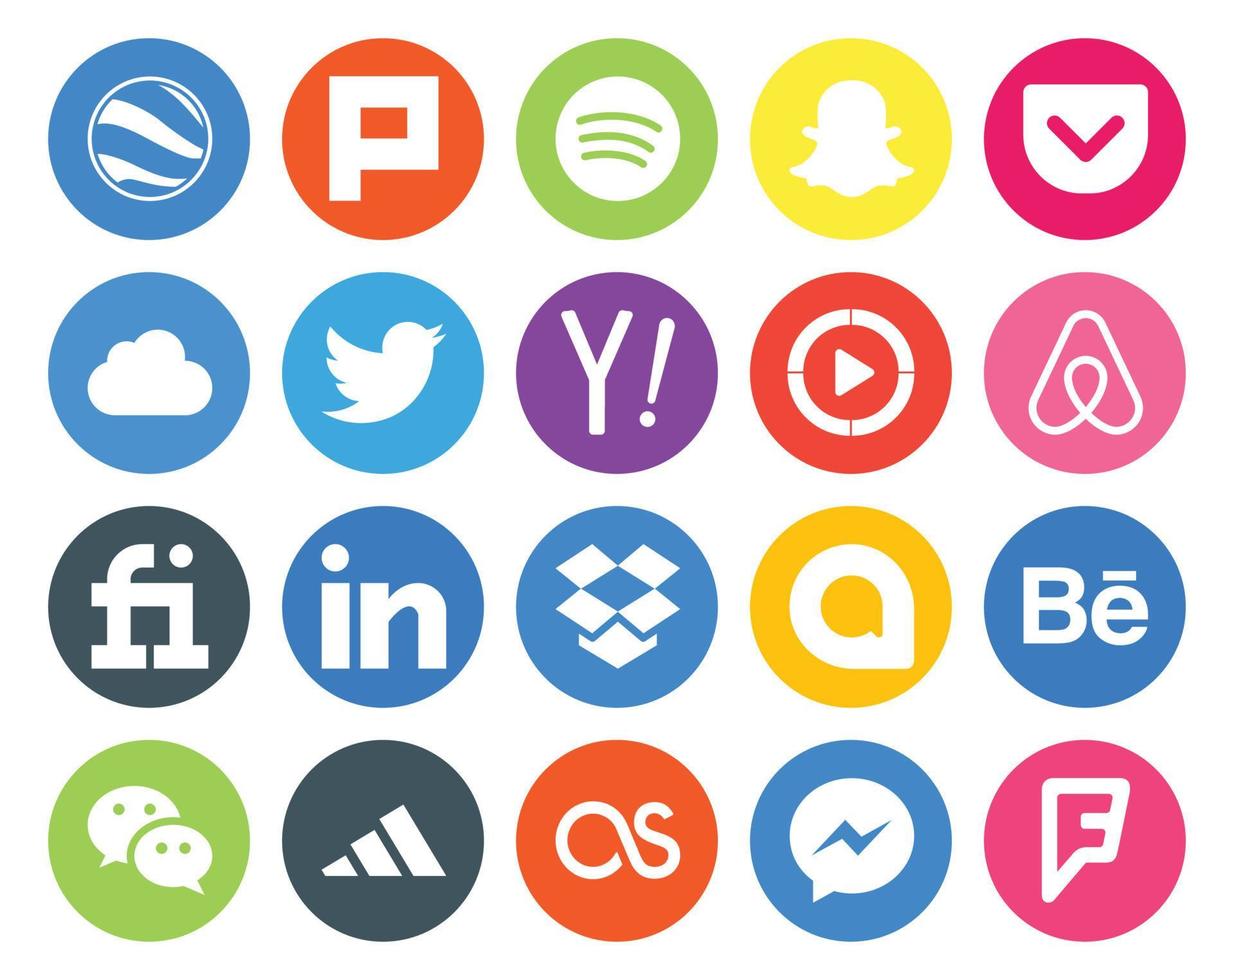 20 social media ikon packa Inklusive Behance Dropbox yahoo edin luft bnb vektor